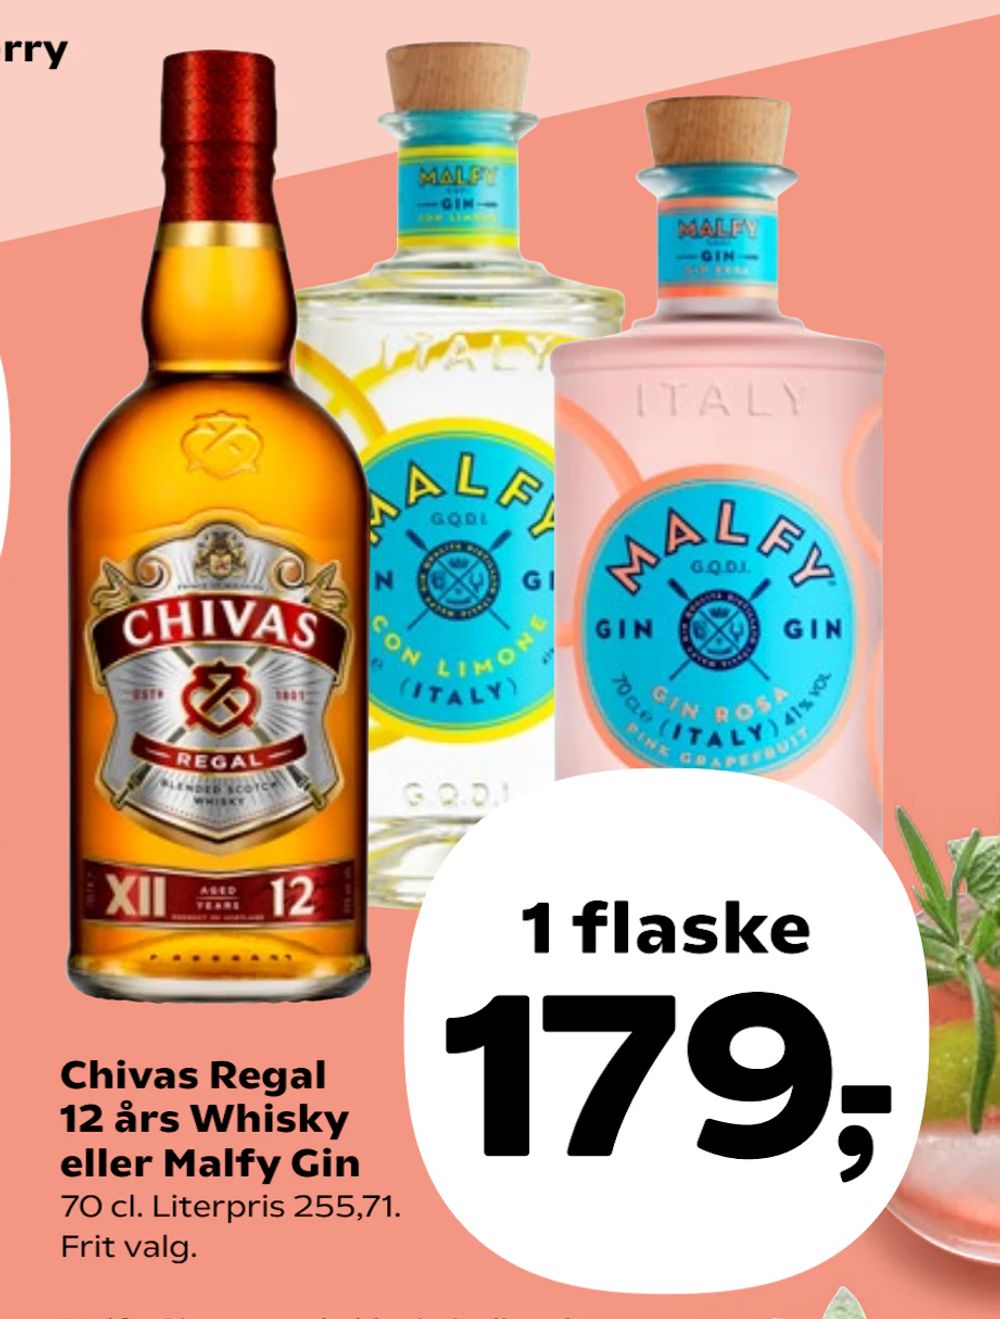 Tilbud på Chivas Regal 12 års Whisky eller Malfy Gin fra Kvickly til 179 kr.